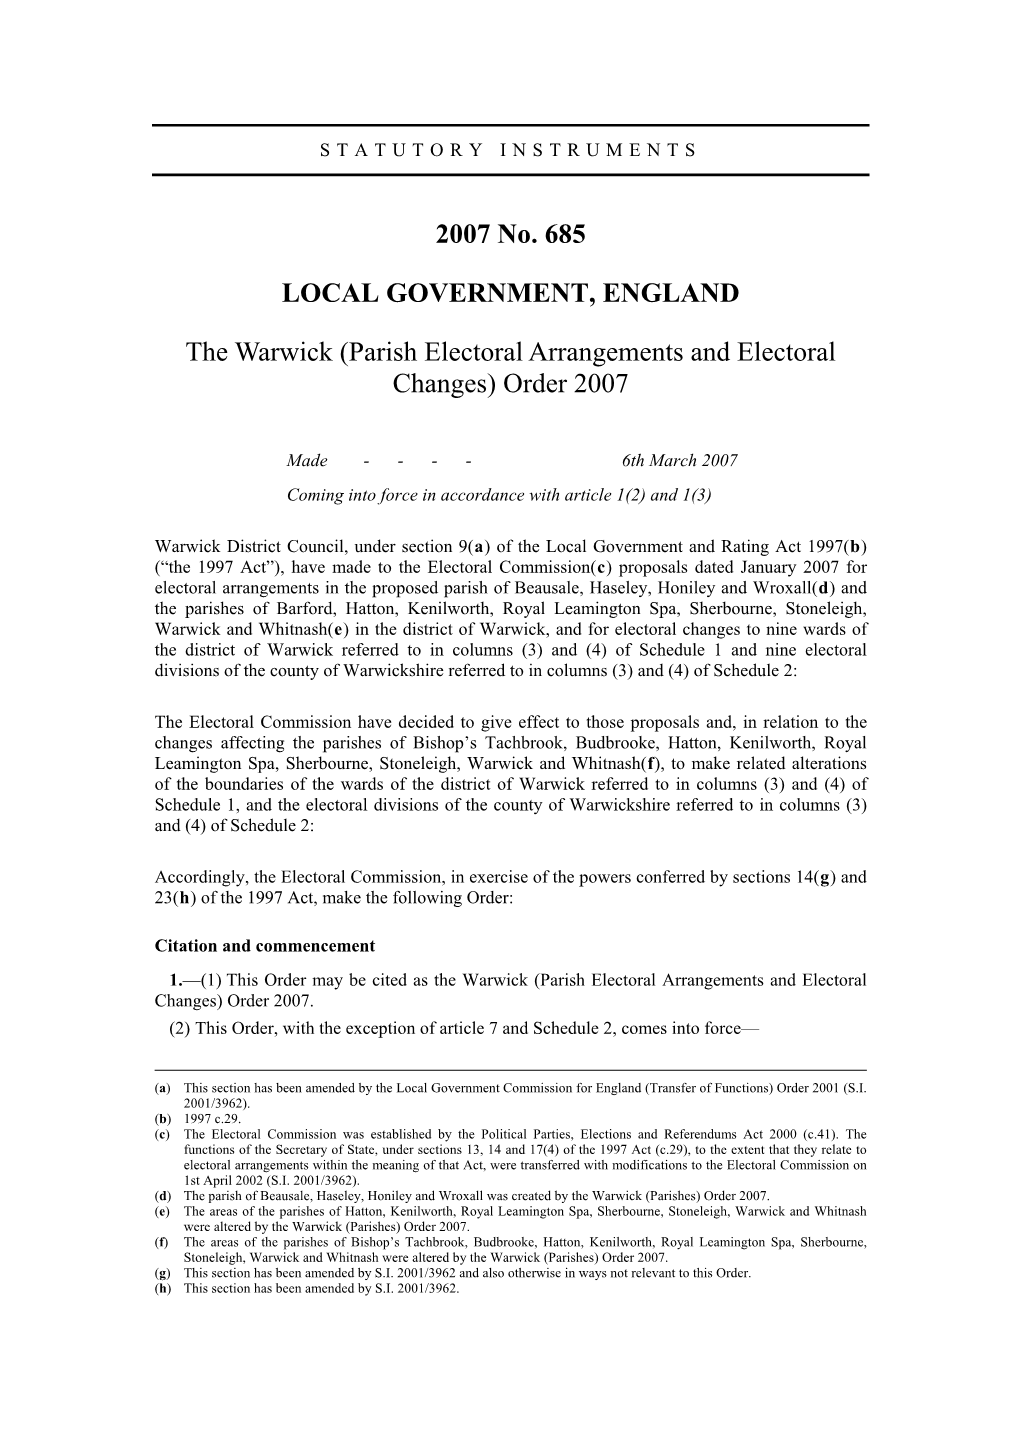 The Warwick (Parish Electoral Arrangements and Electoral Changes) Order 2007